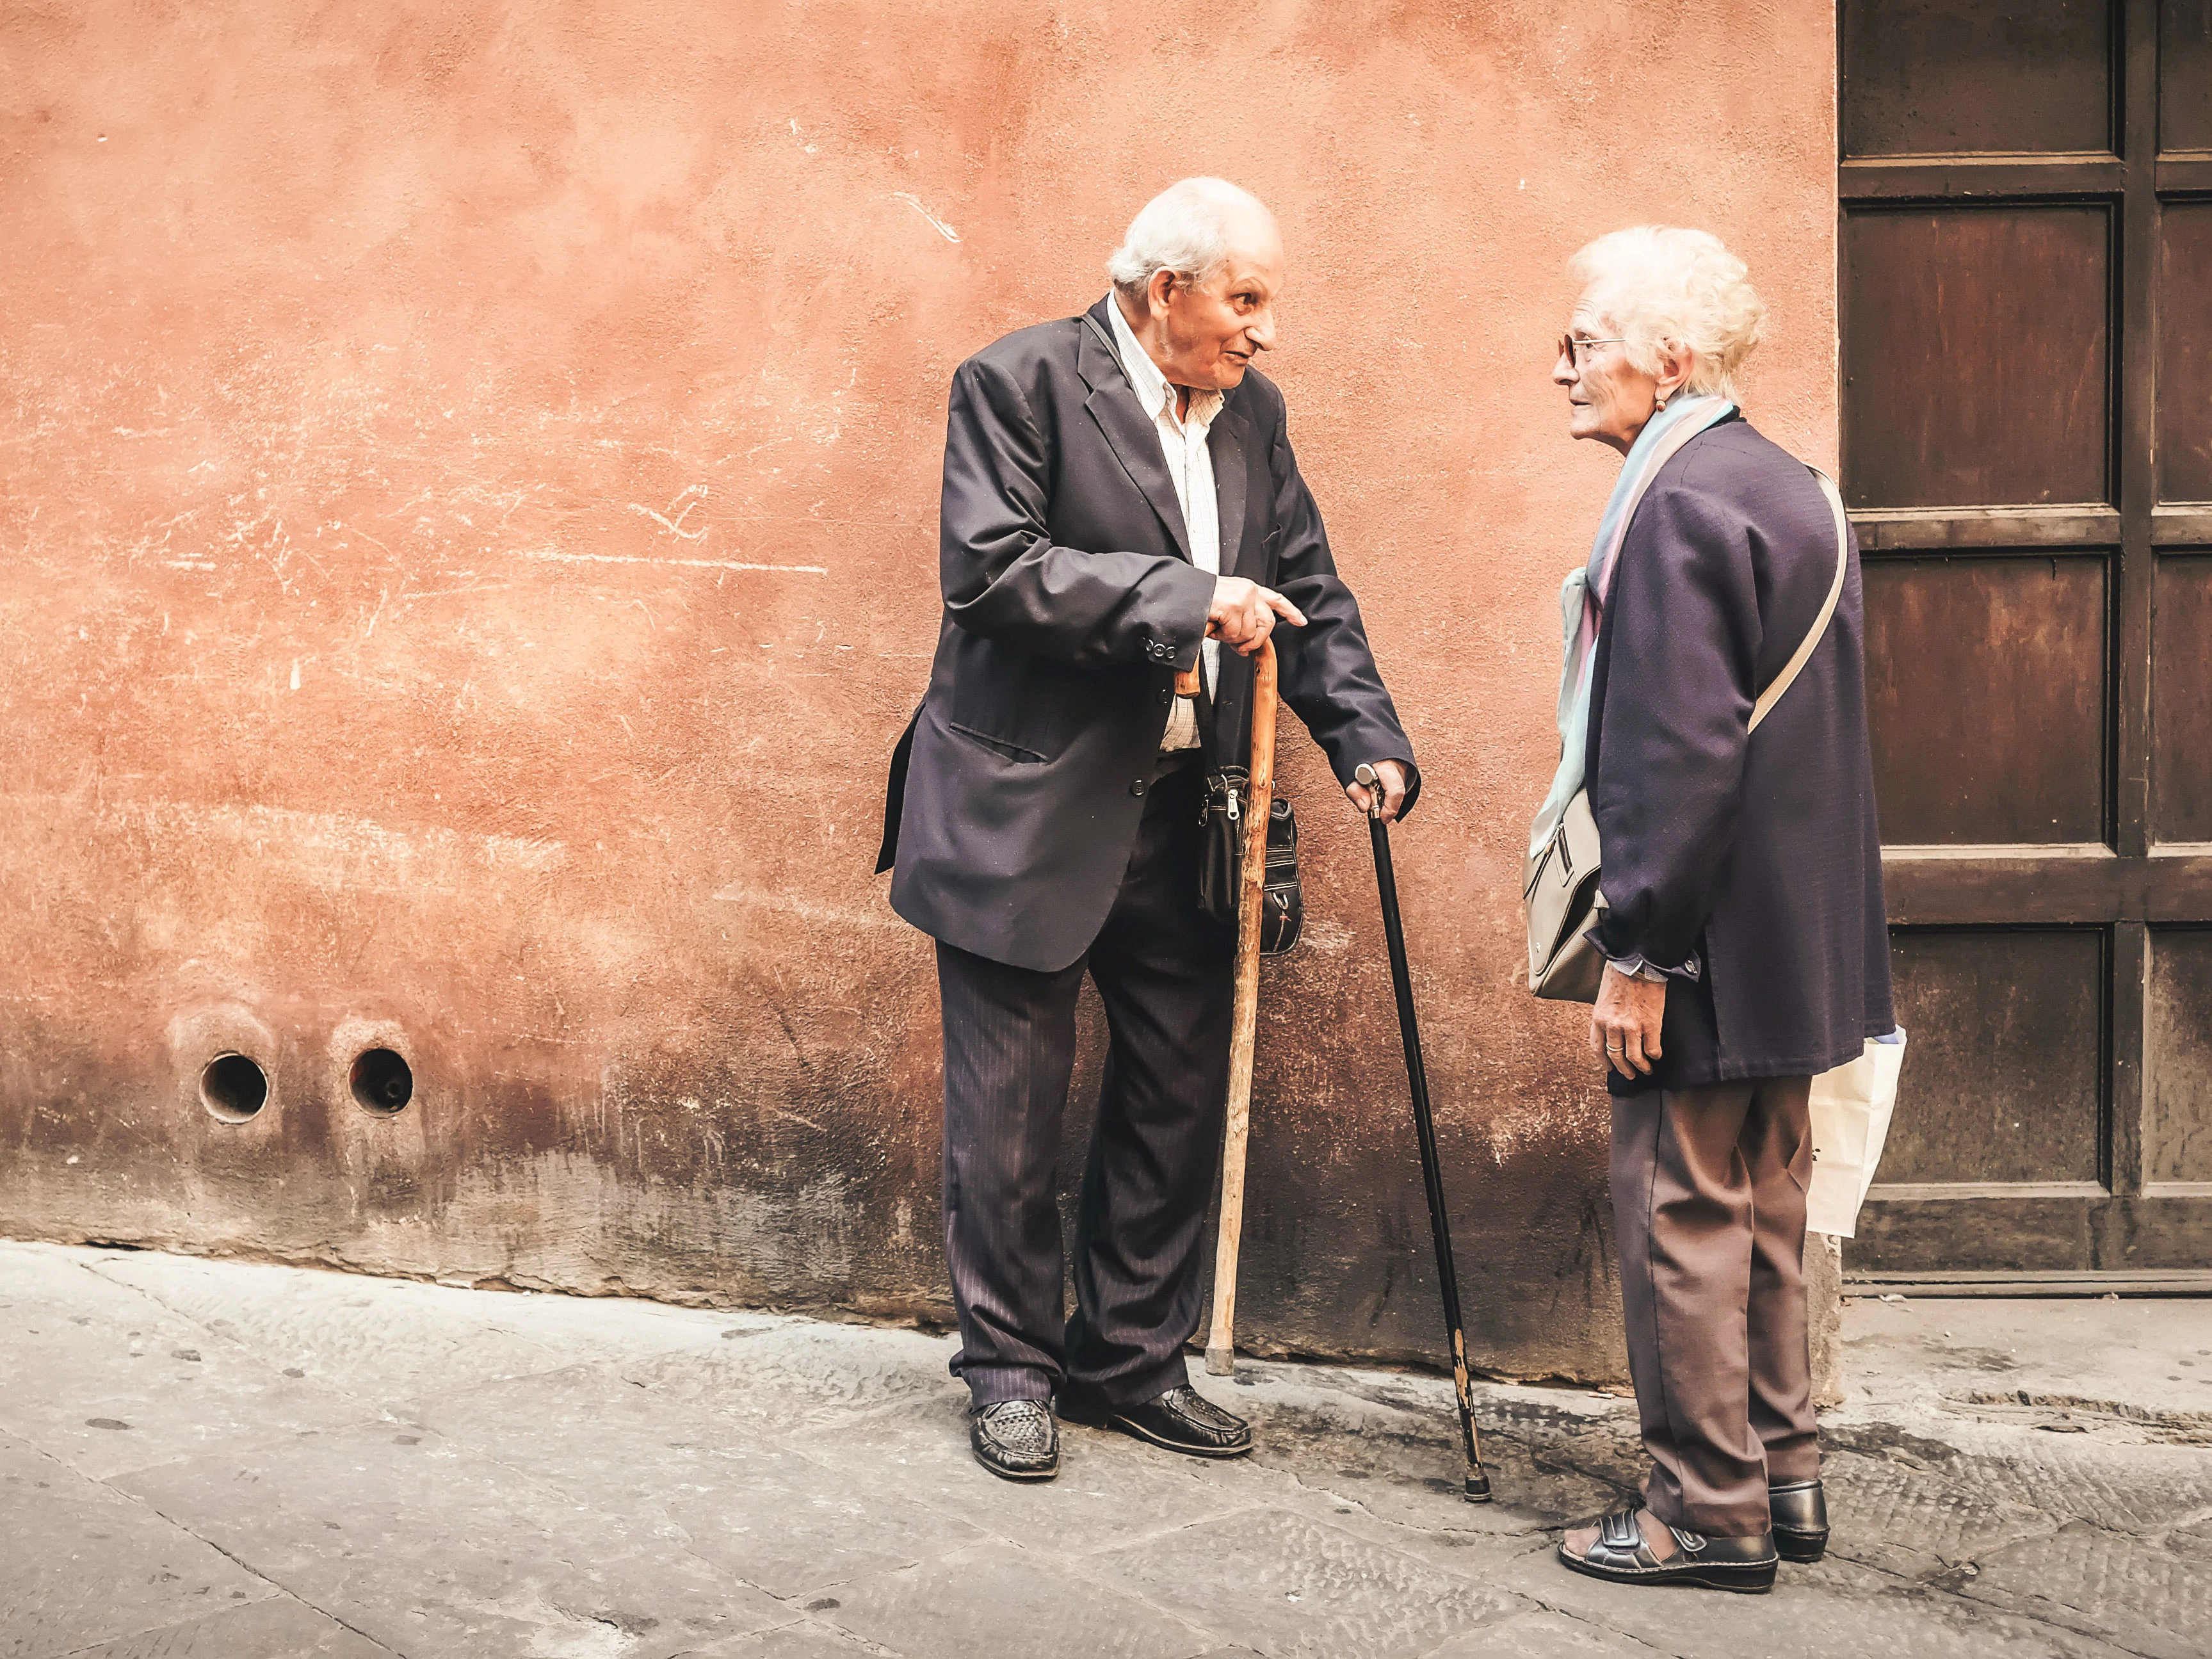 Two old people chatting on an Italian street | Crosta & Mollica